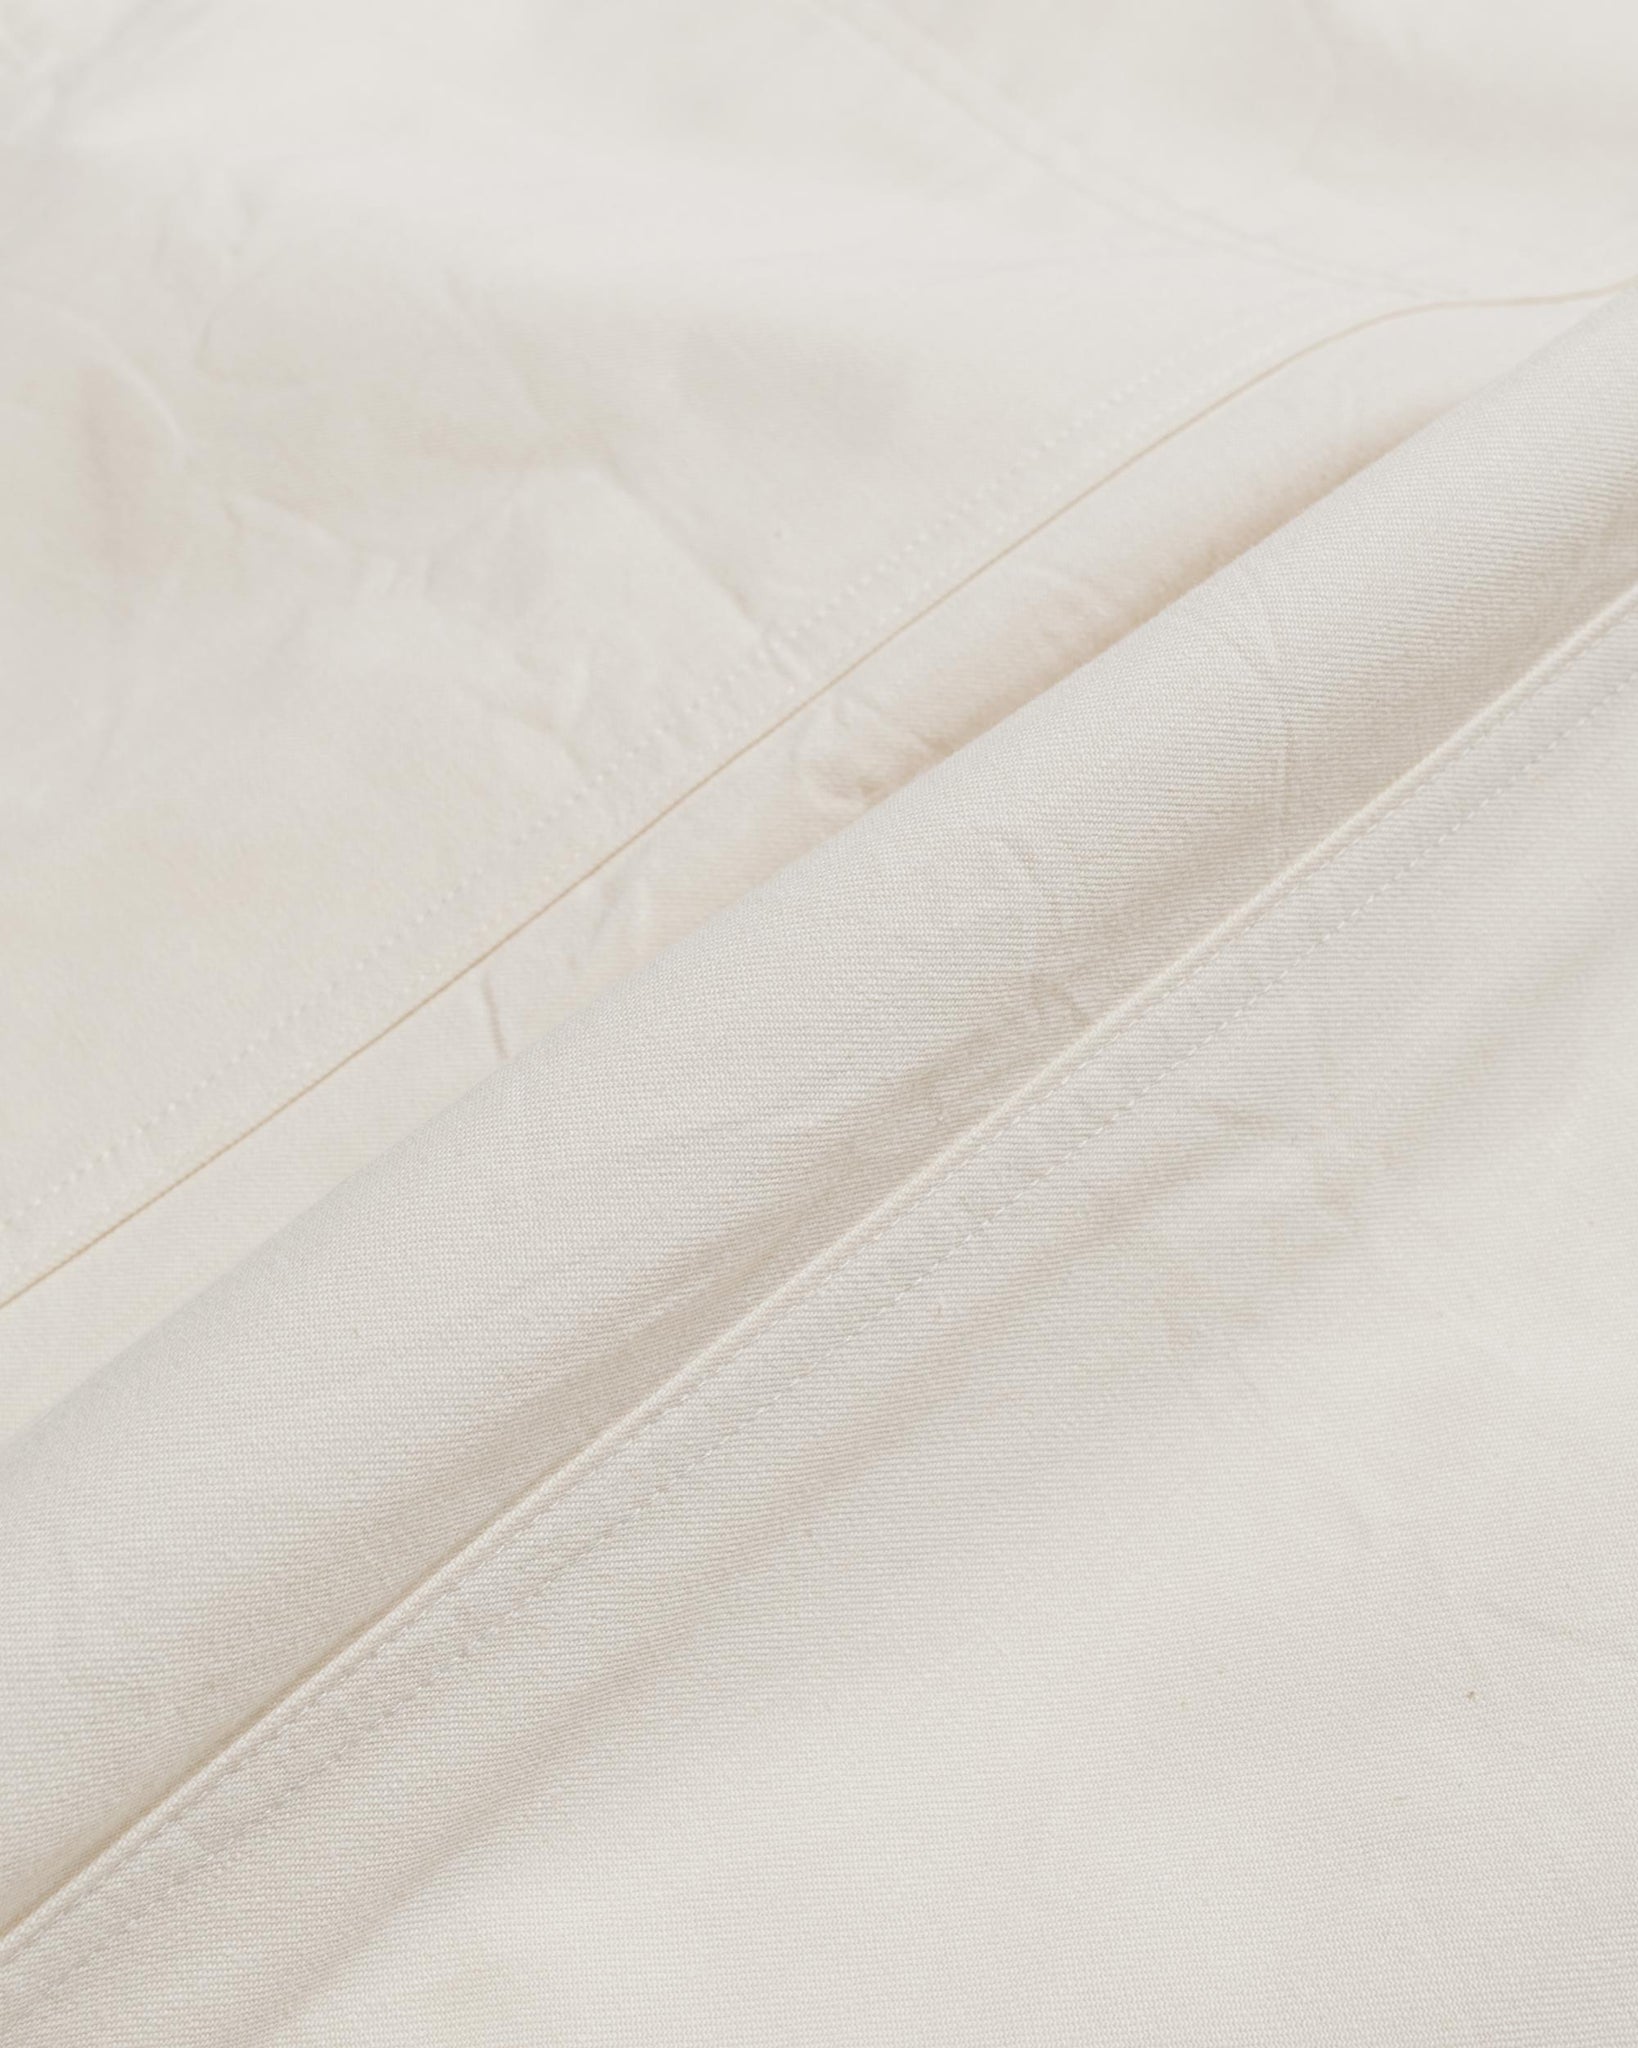 ts(s) Cropped Work Pants Cotton Slub Yarn Twill Cloth Natural fabric